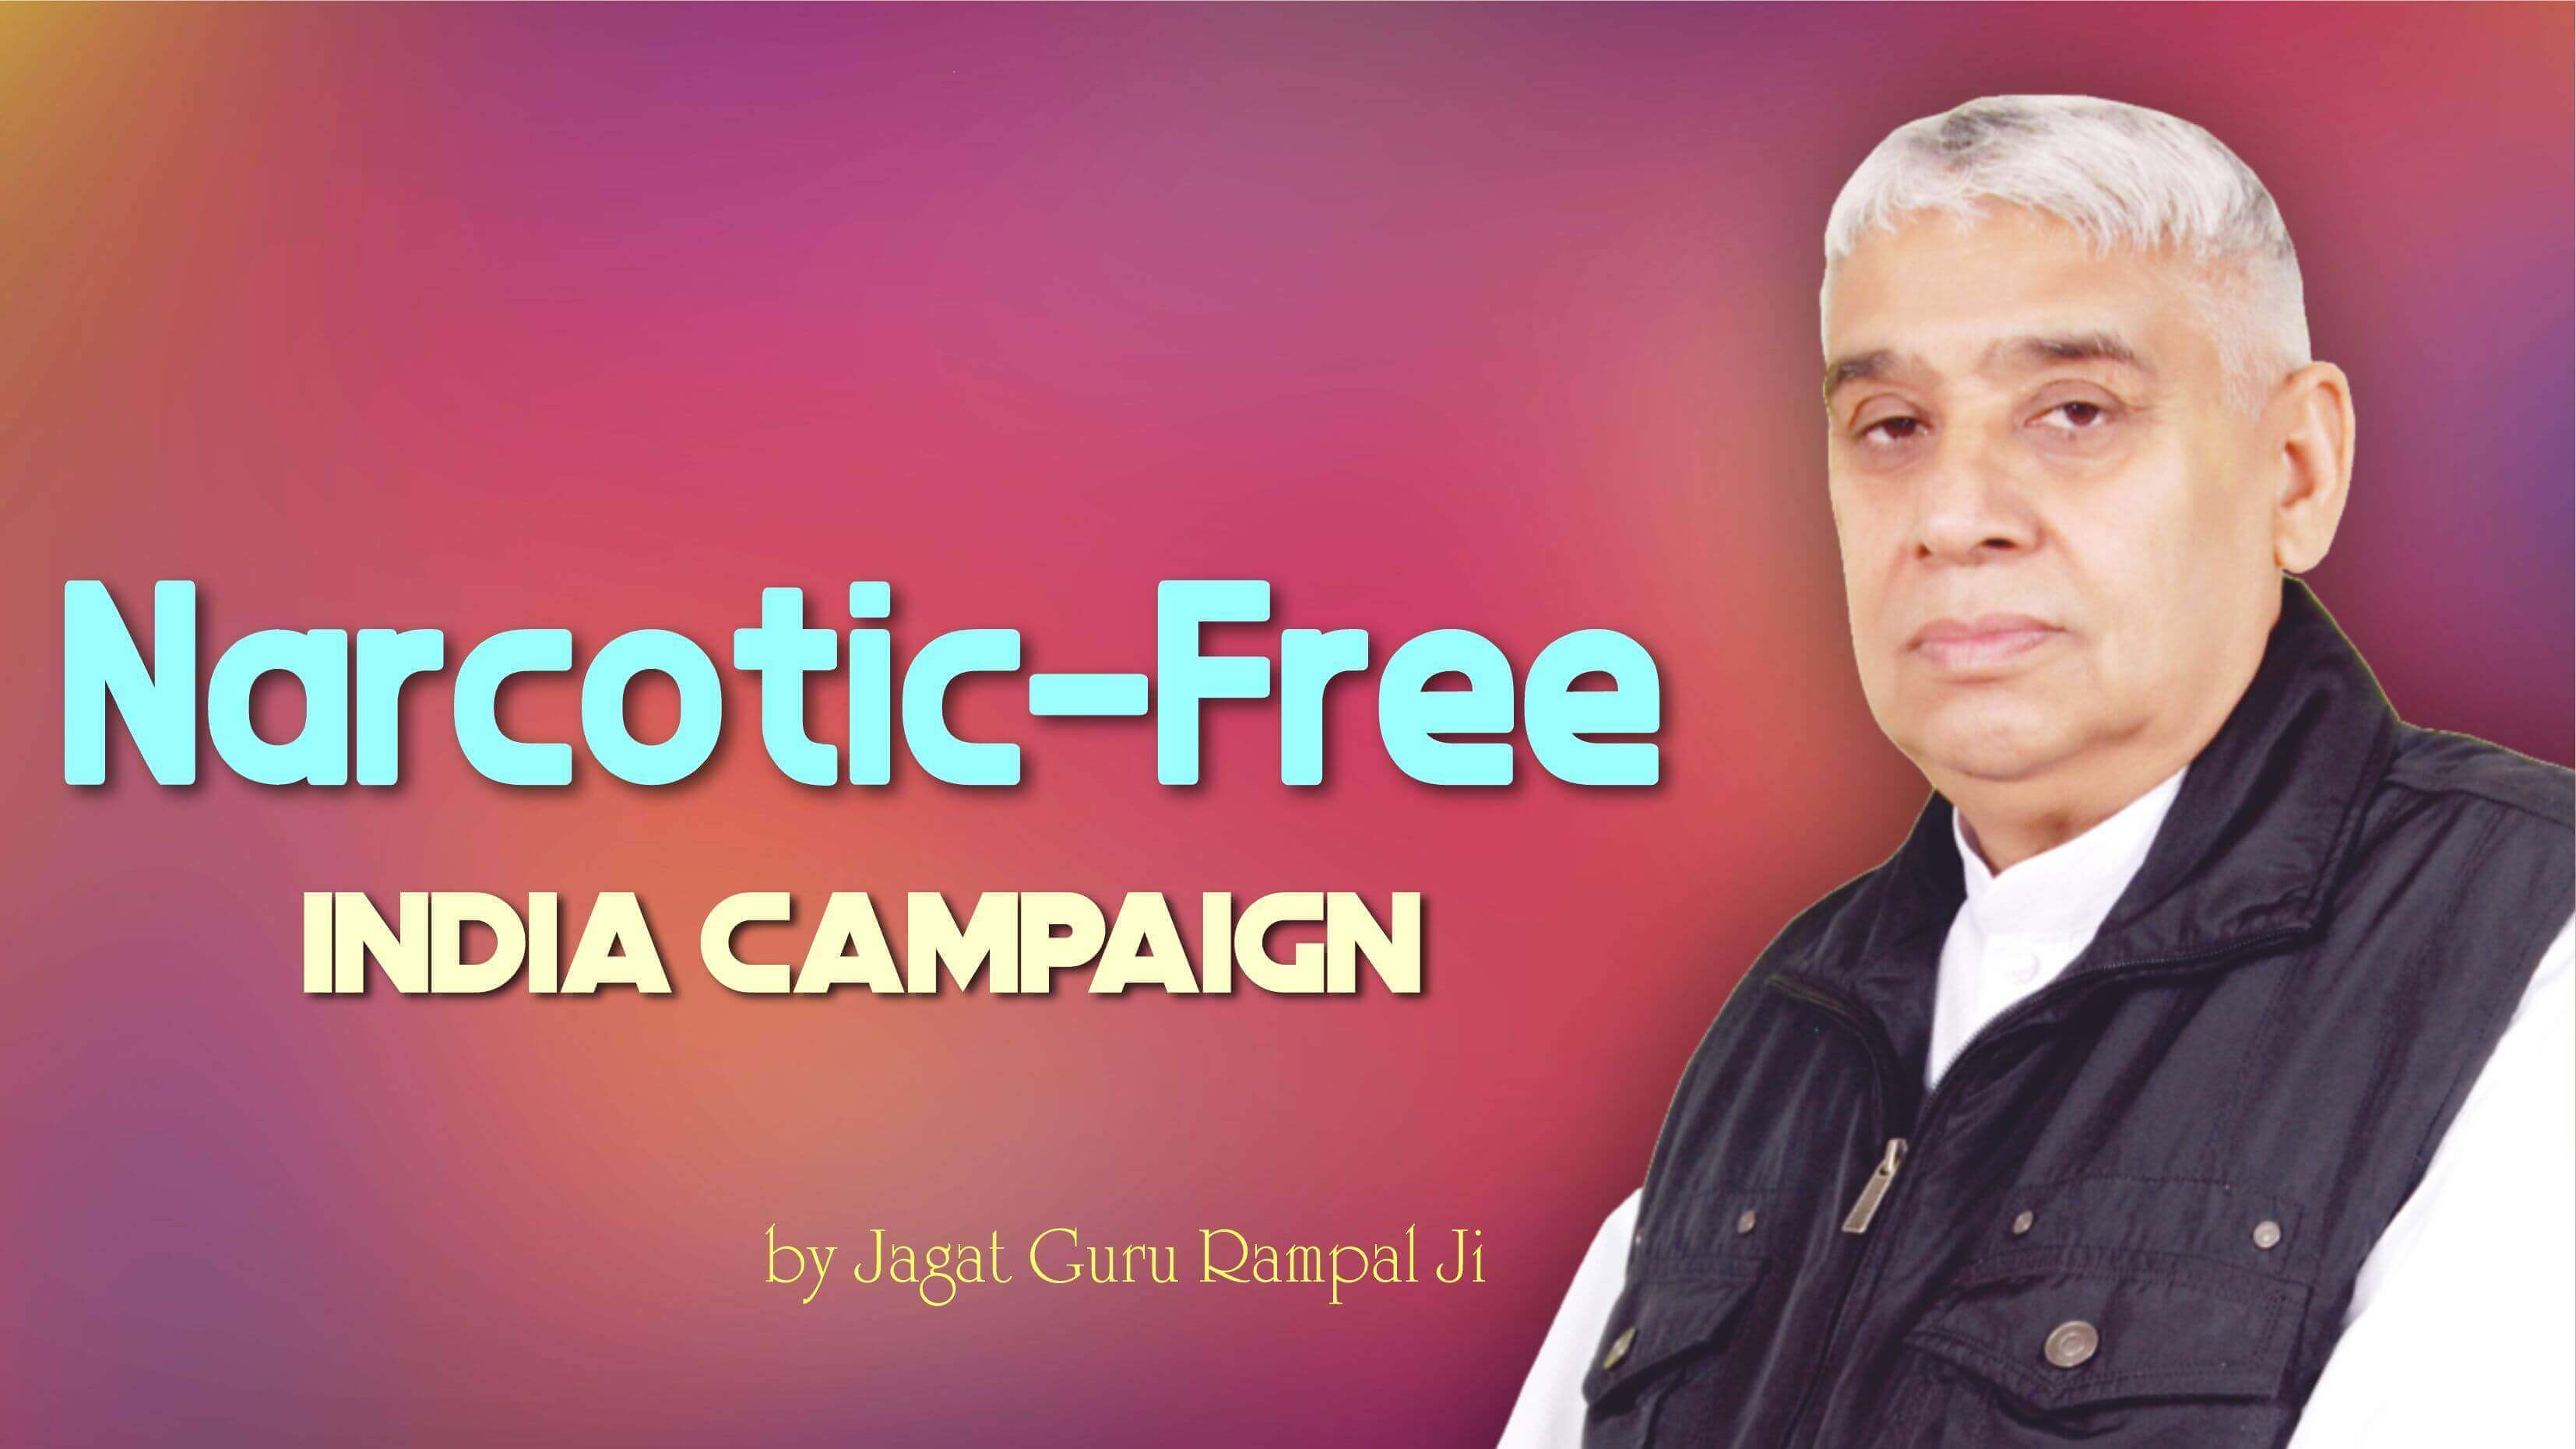 Narcotic-Free India Campaign by Jagat Guru Rampal Ji